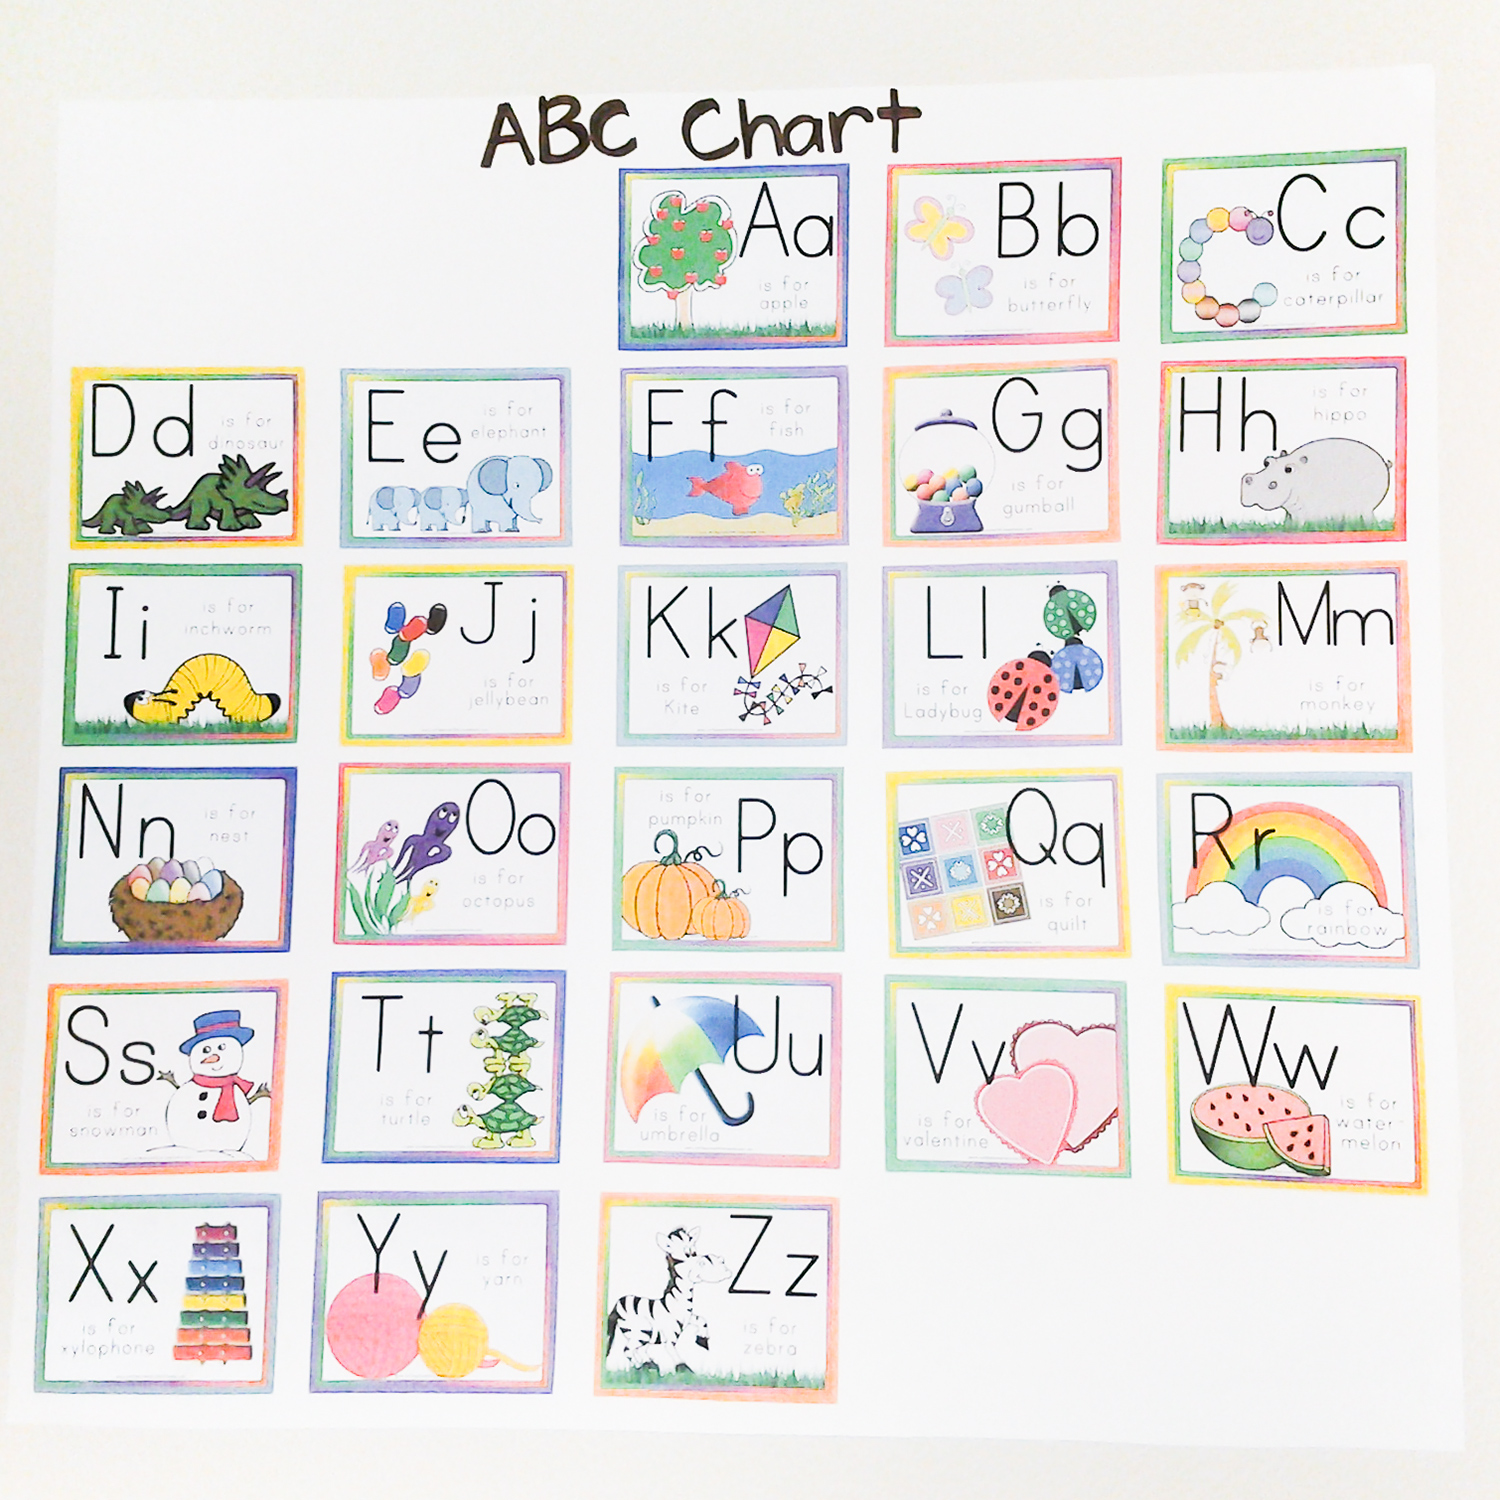 An Abc Chart